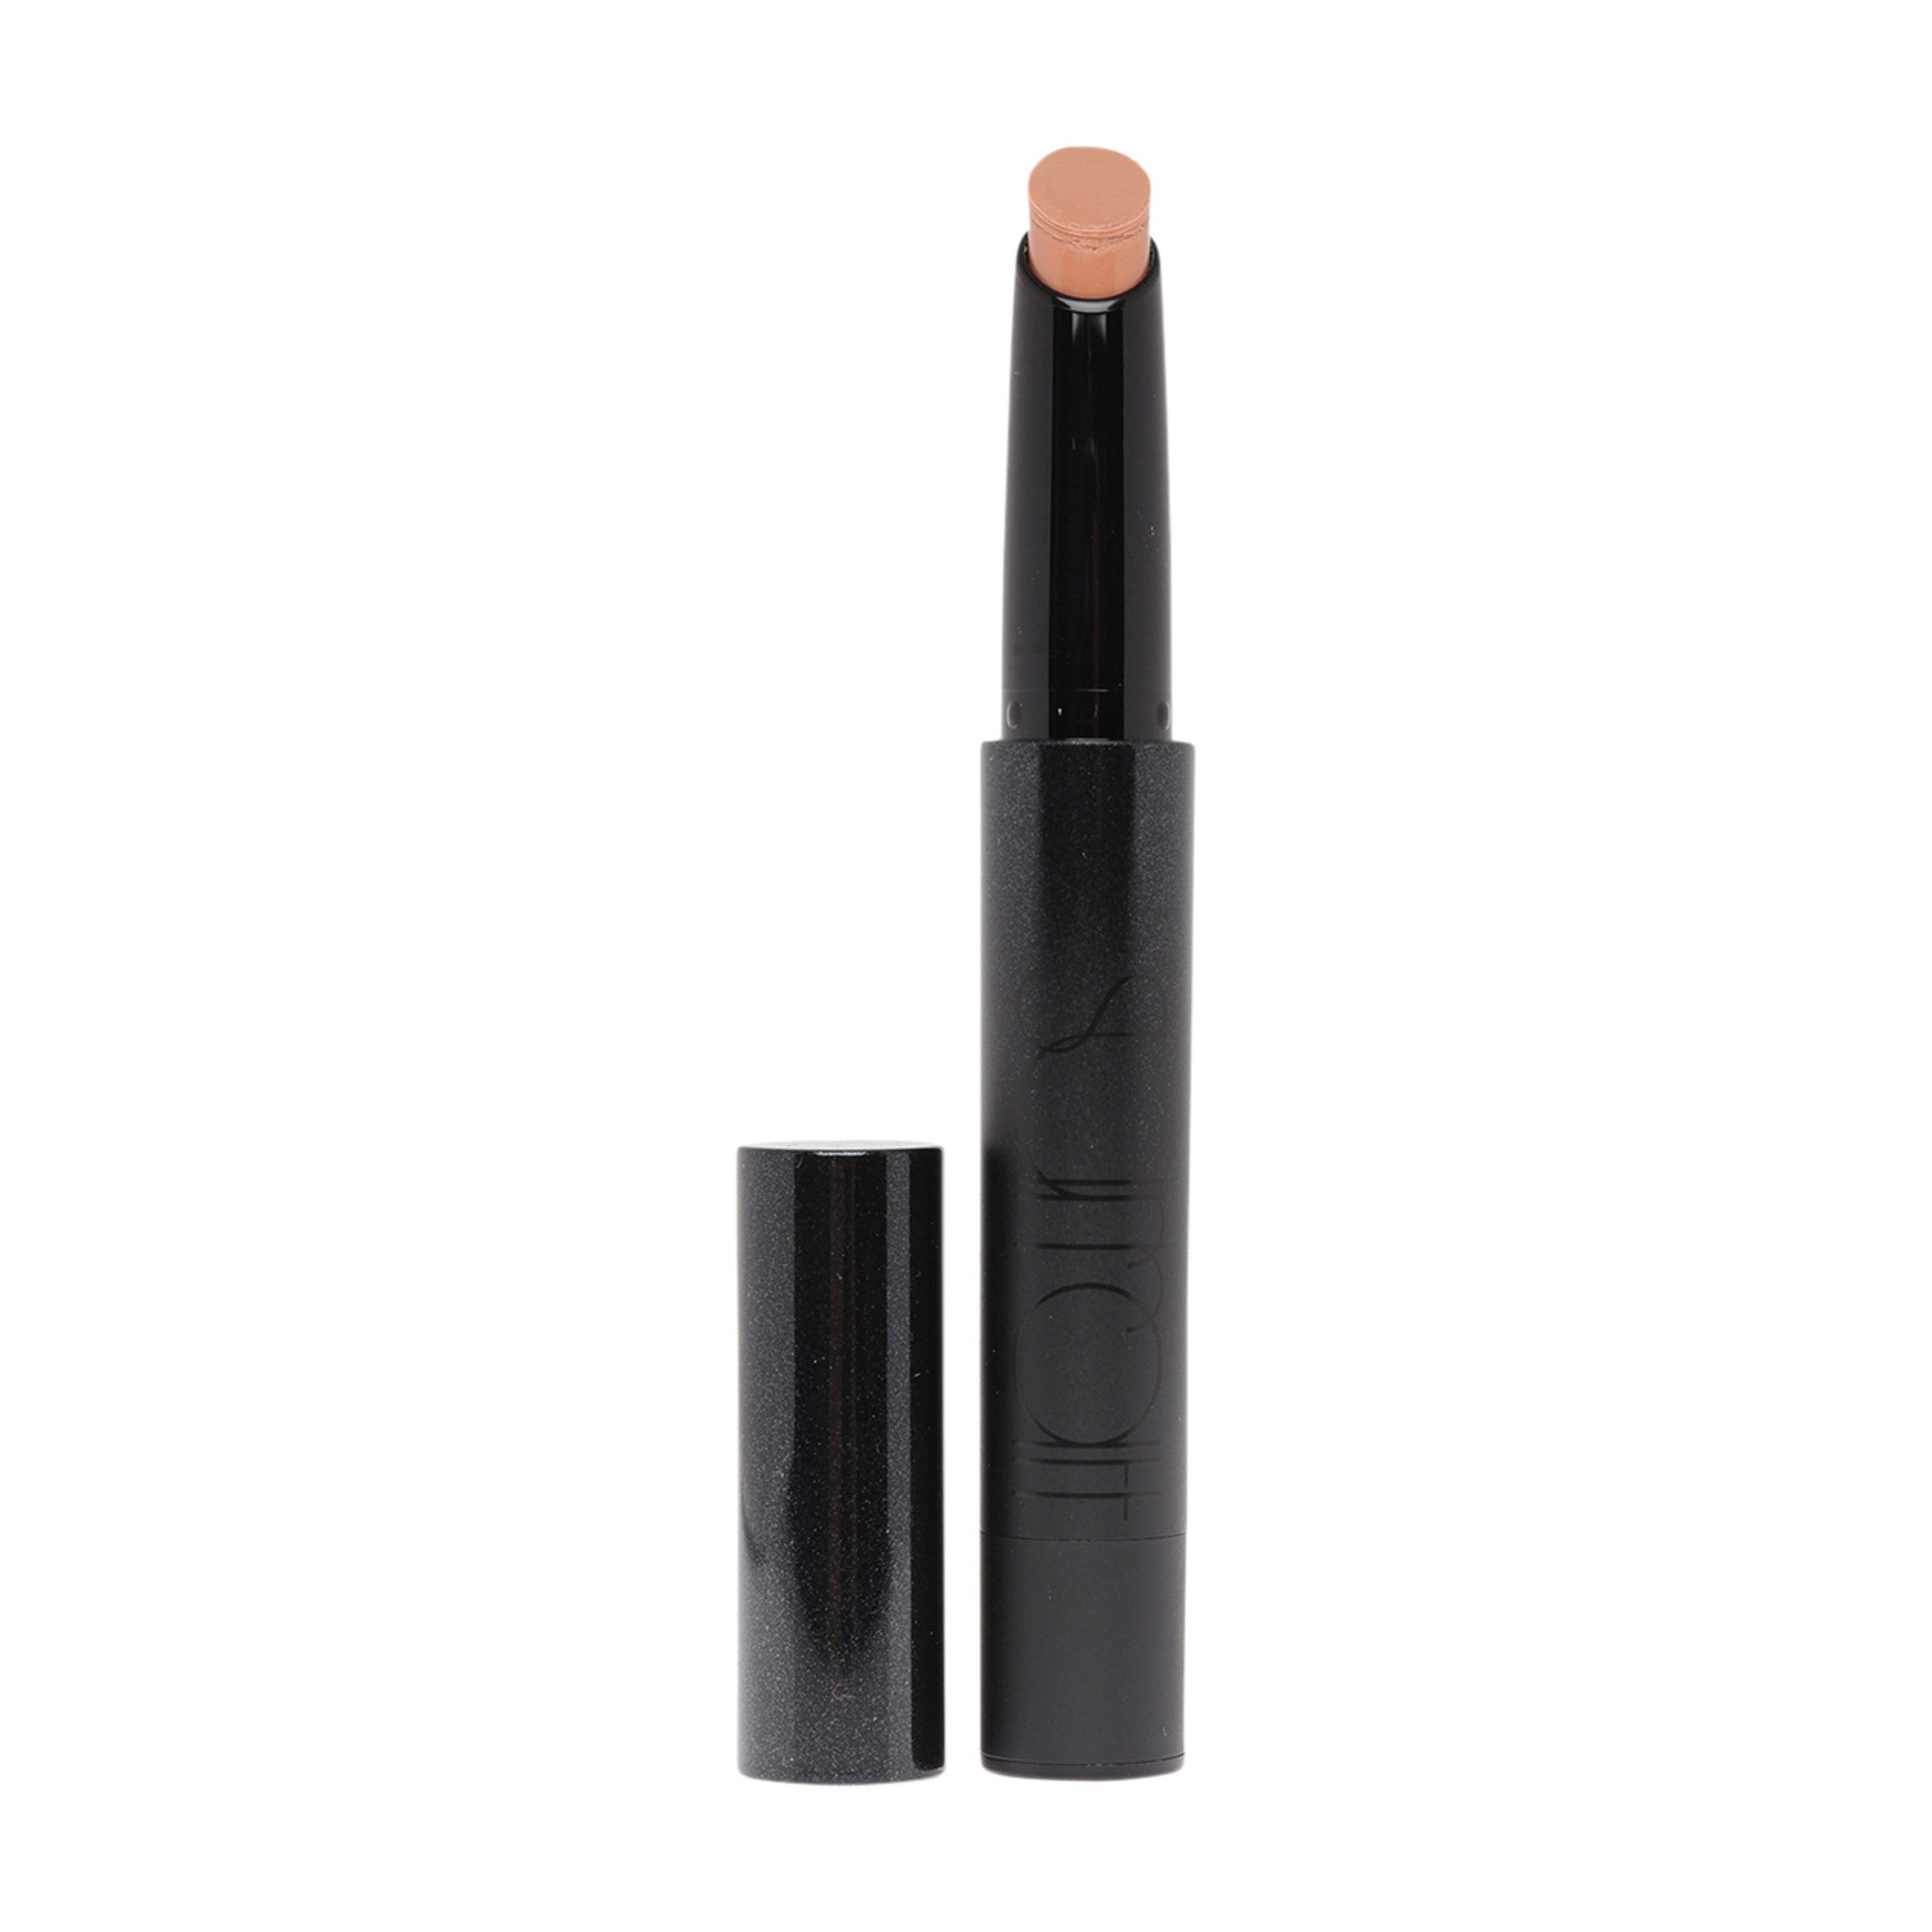 Surratt Lipslique Color/Shade variant: Nu De Soleil (Warm Nude) main image. This product is in the color nude